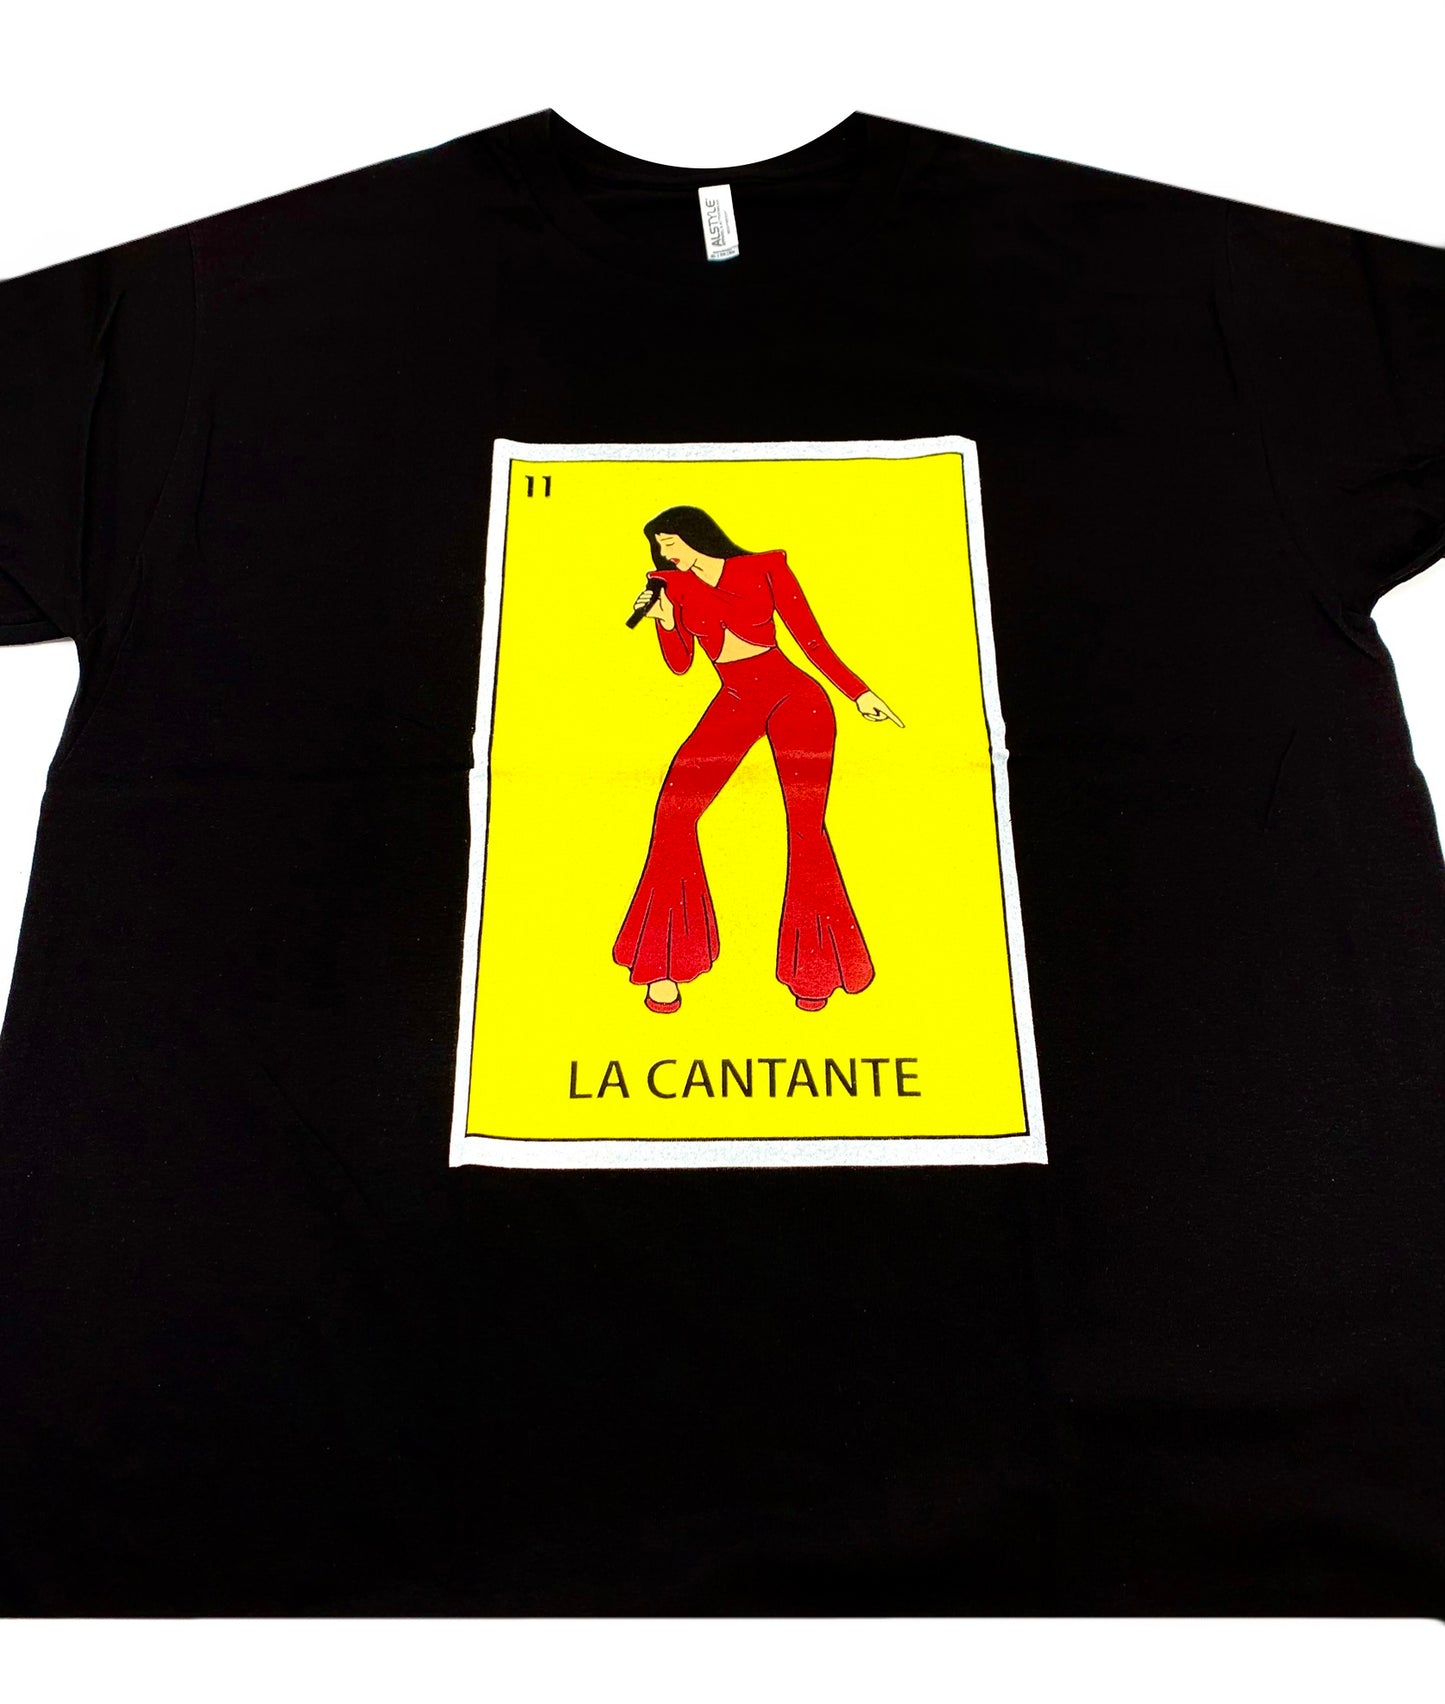 (12ct) La Cantante T-shirts $6.99 EA